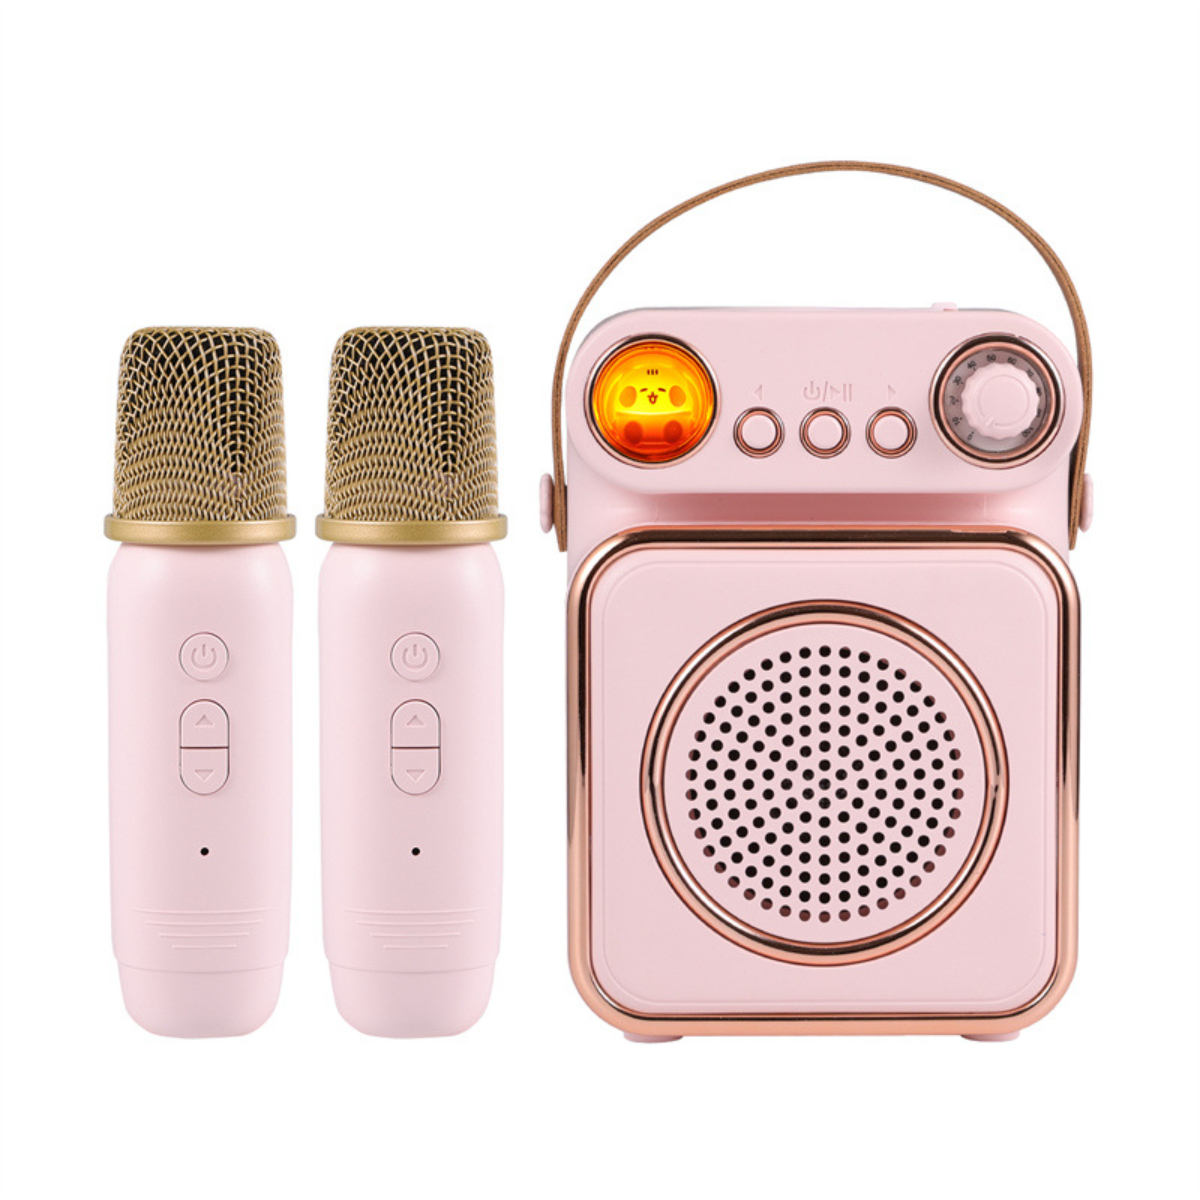 Drahtlos-Mikrofon, Bluetooth-Lautsprecher, Lange Rosa Akkulaufzeit Bluetooth-Lautsprecher, BYTELIKE 3-Einheiten-Stereoklang,